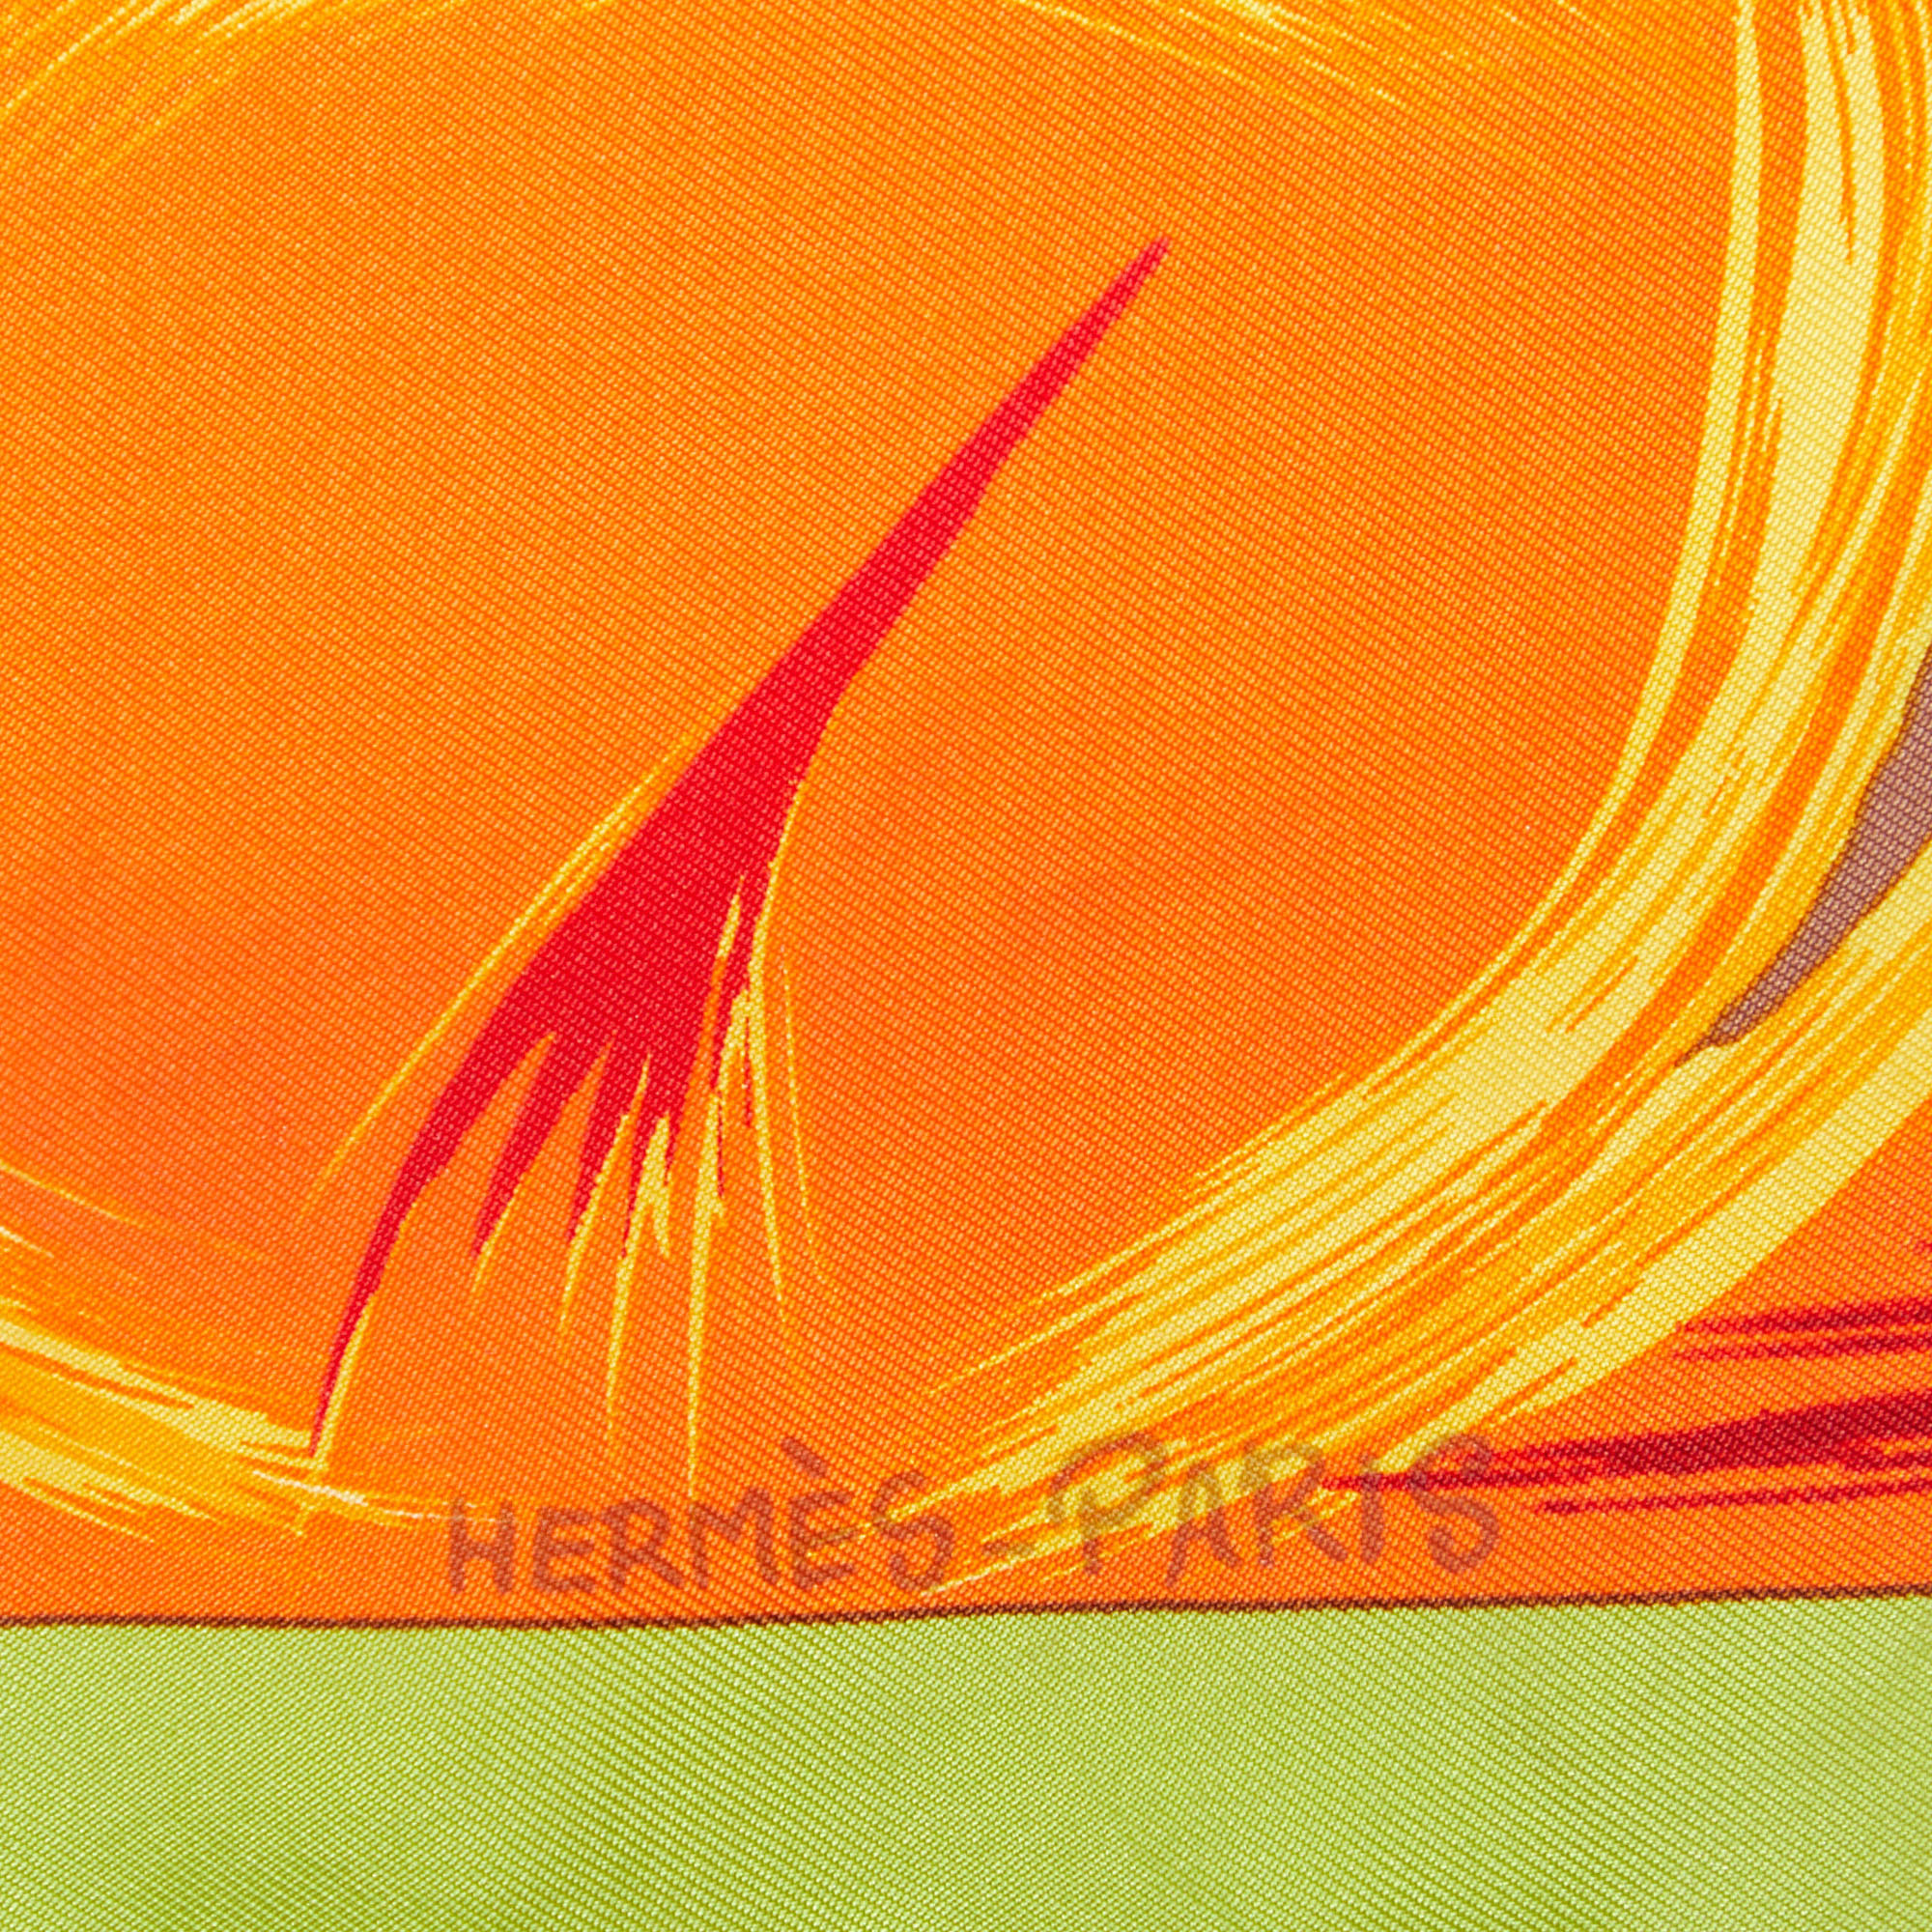 Hermes Multicolor La Tour Eiffel S’envole Printed Silk Square Handkerchief